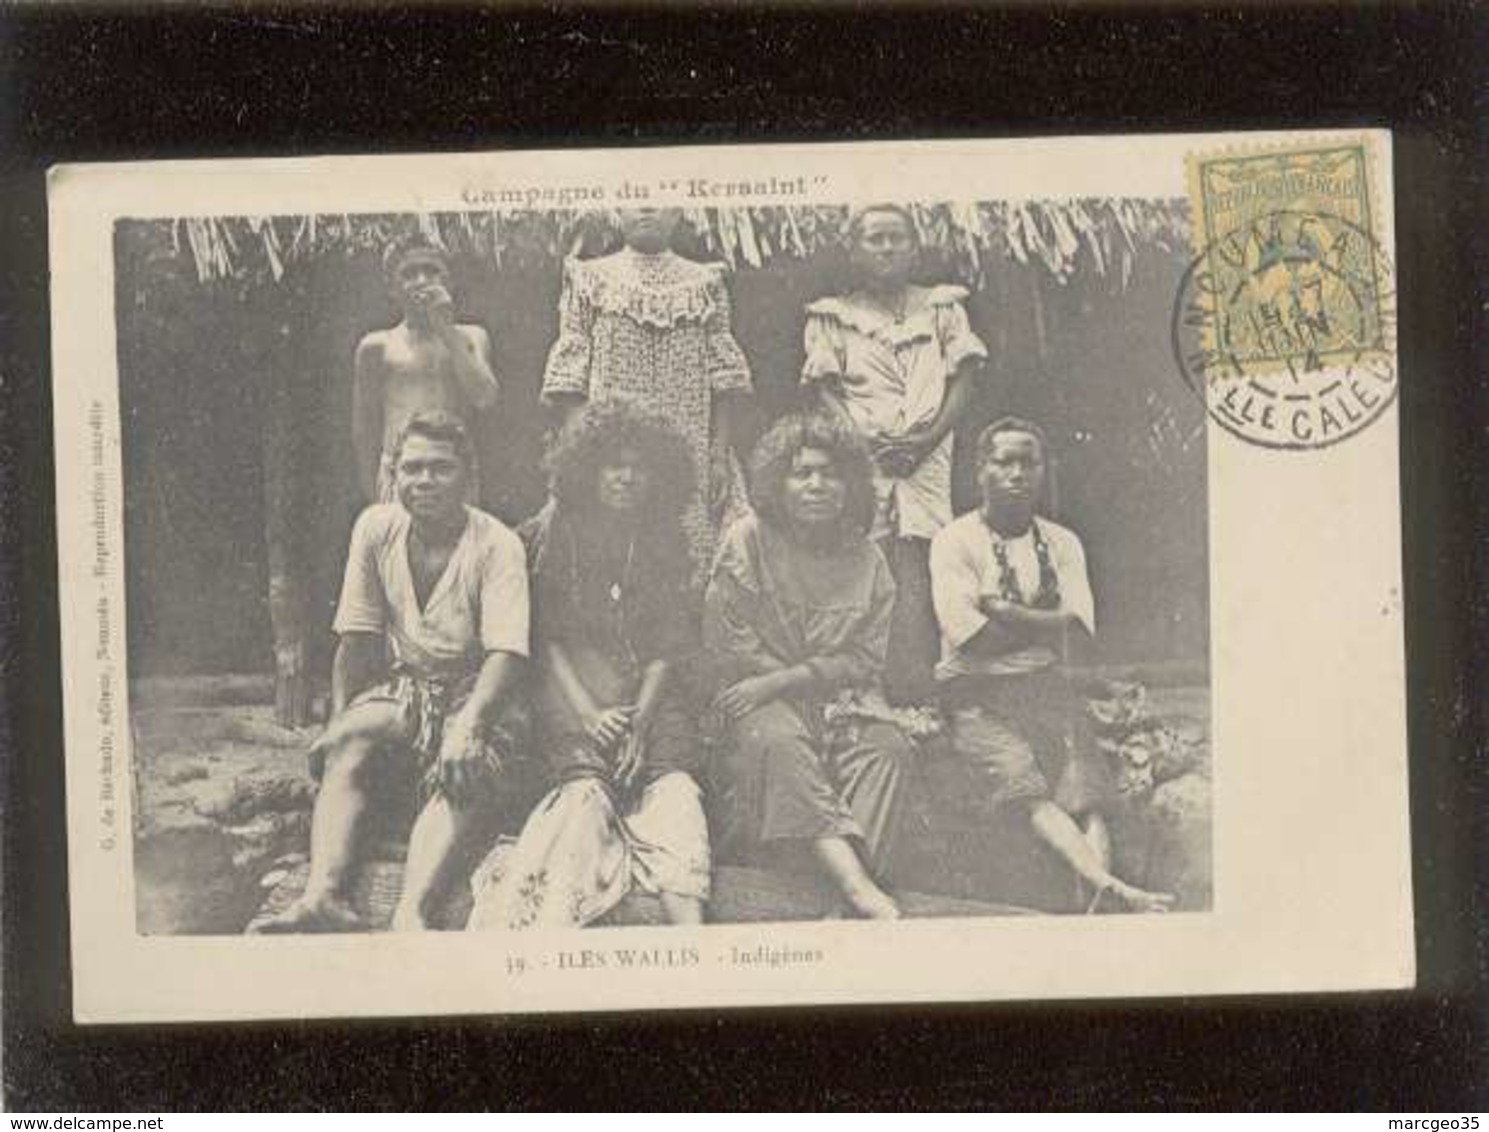 Campagne Du Kersaint Iles Wallis Indigènes édit. G. De Béchade N° 39 - Wallis And Futuna